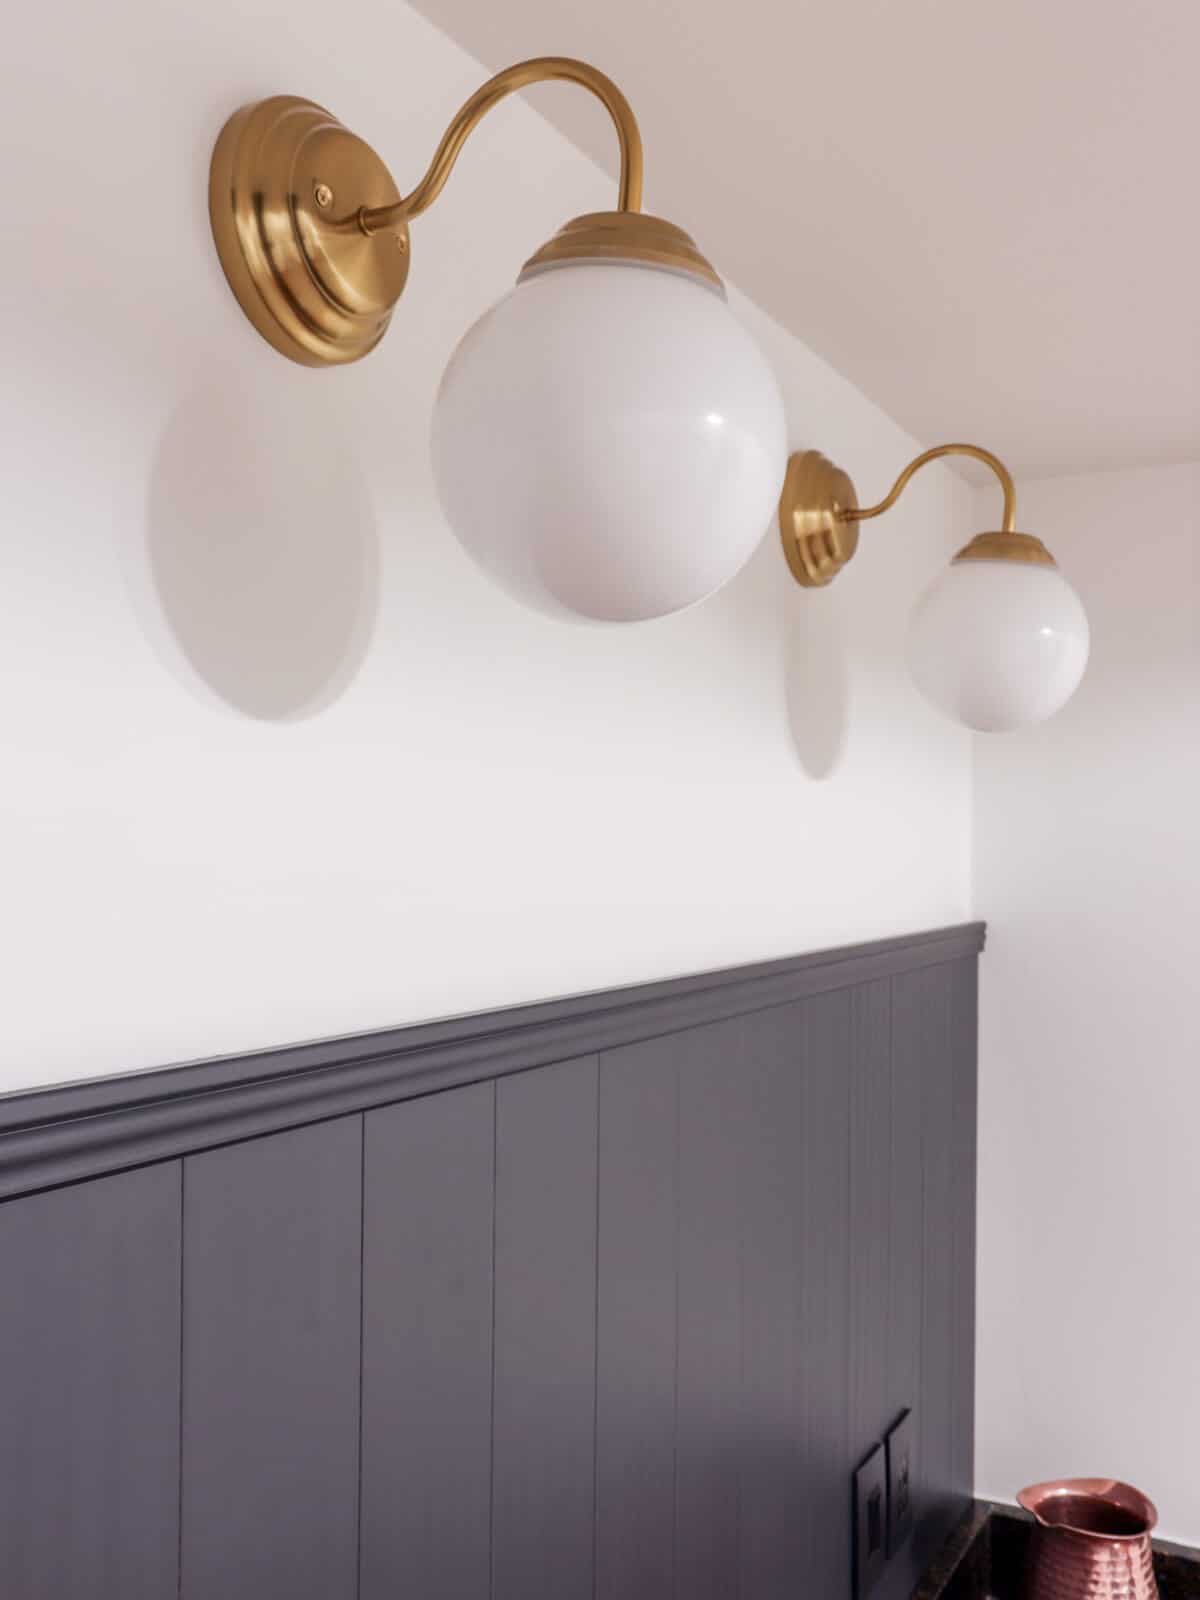 Gray backsplash with brass harp lights with white round globes